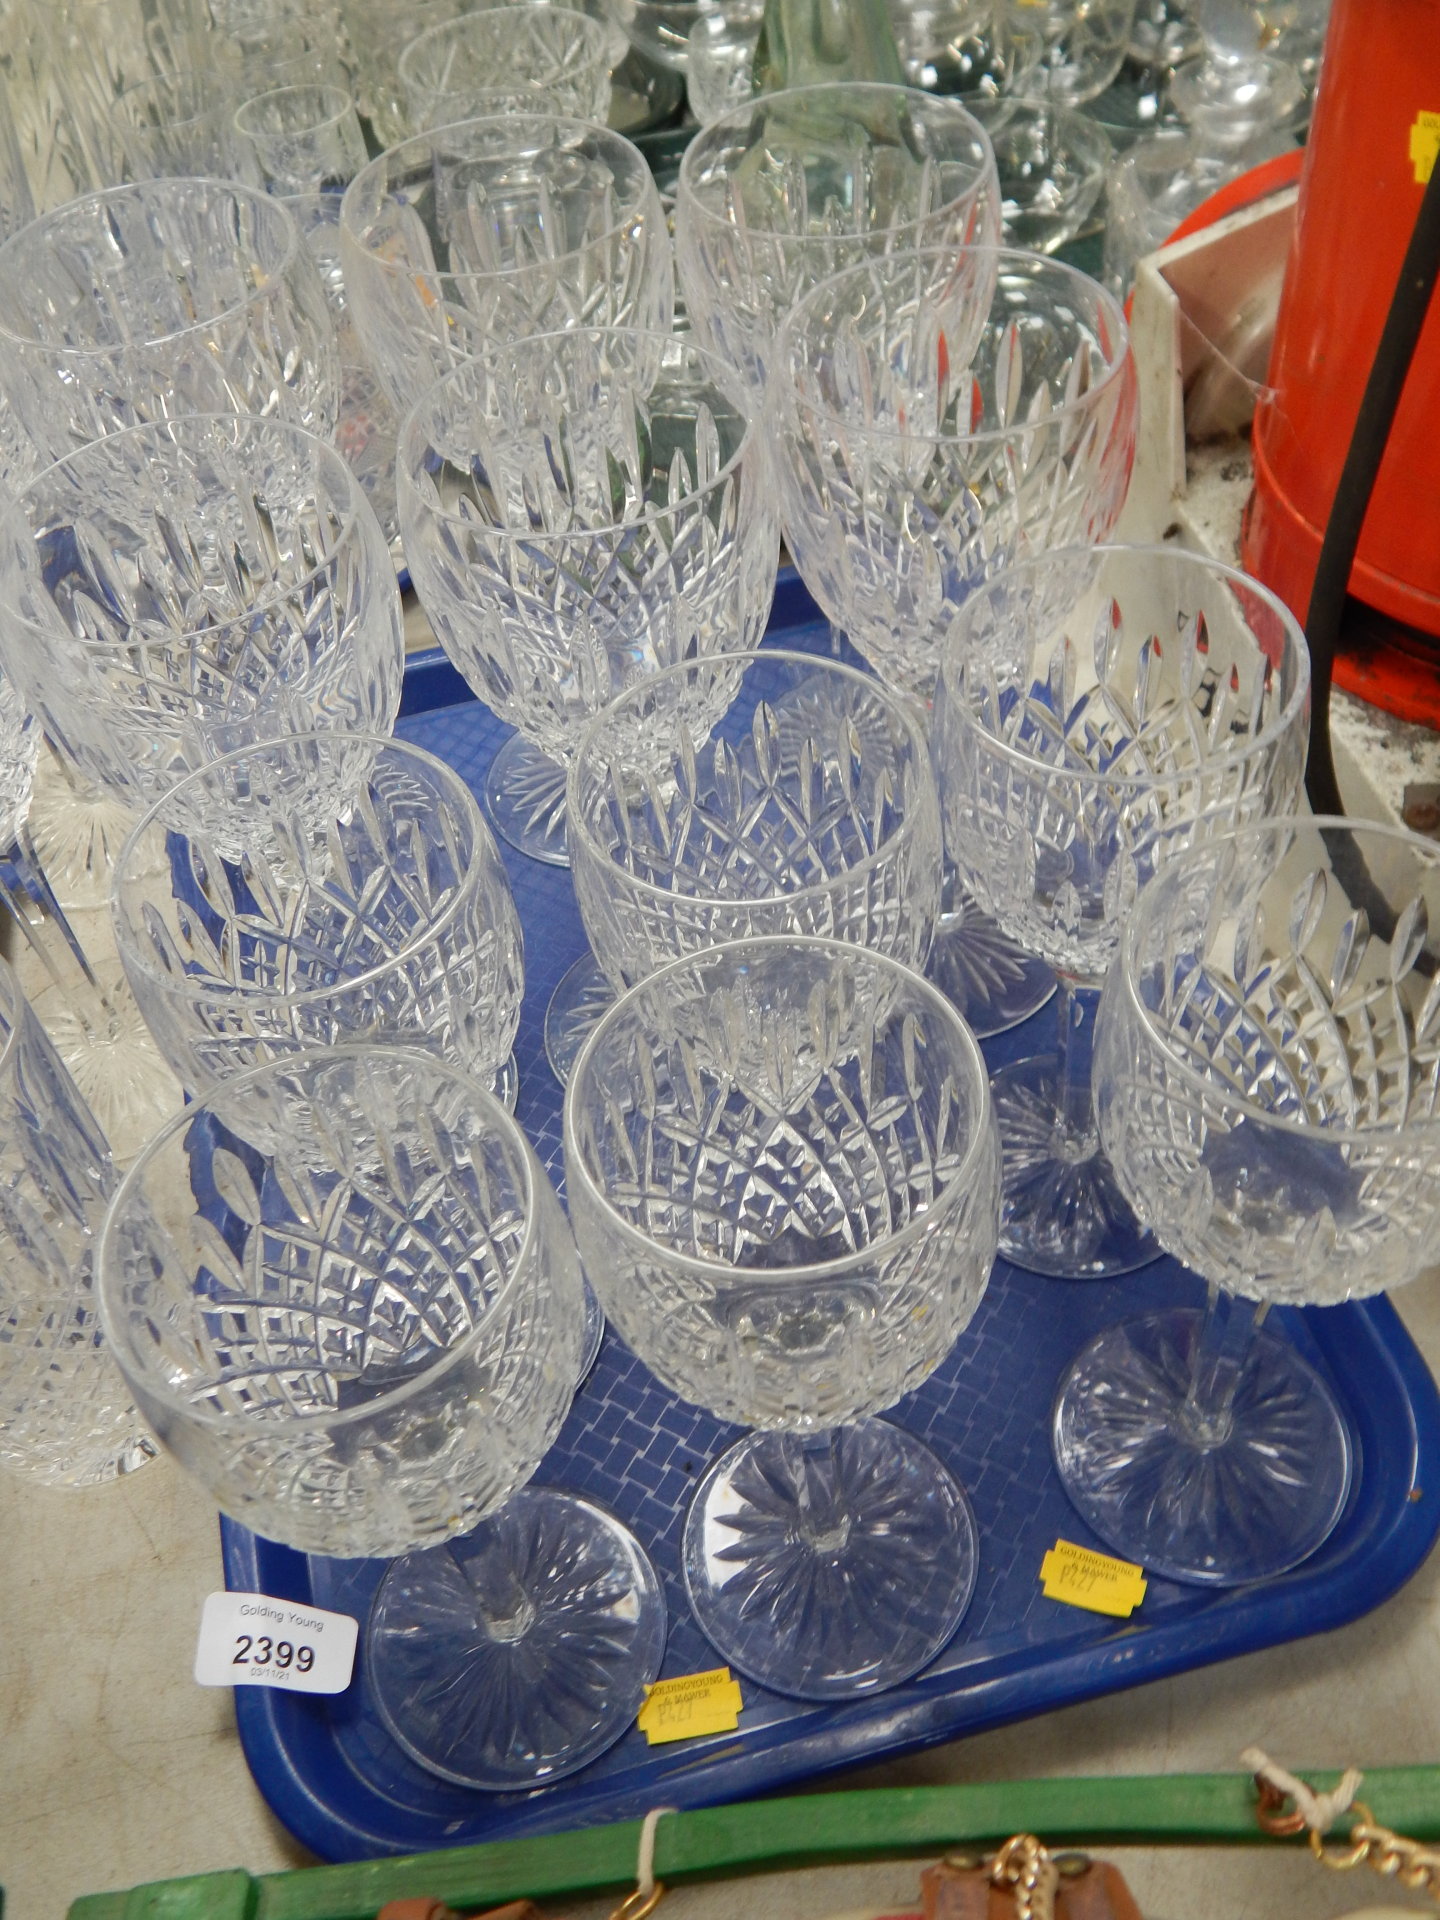 Assorted Stuart Crystal glasses, wine glasses, champagne flutes, tumblers, etc. (2 trays)